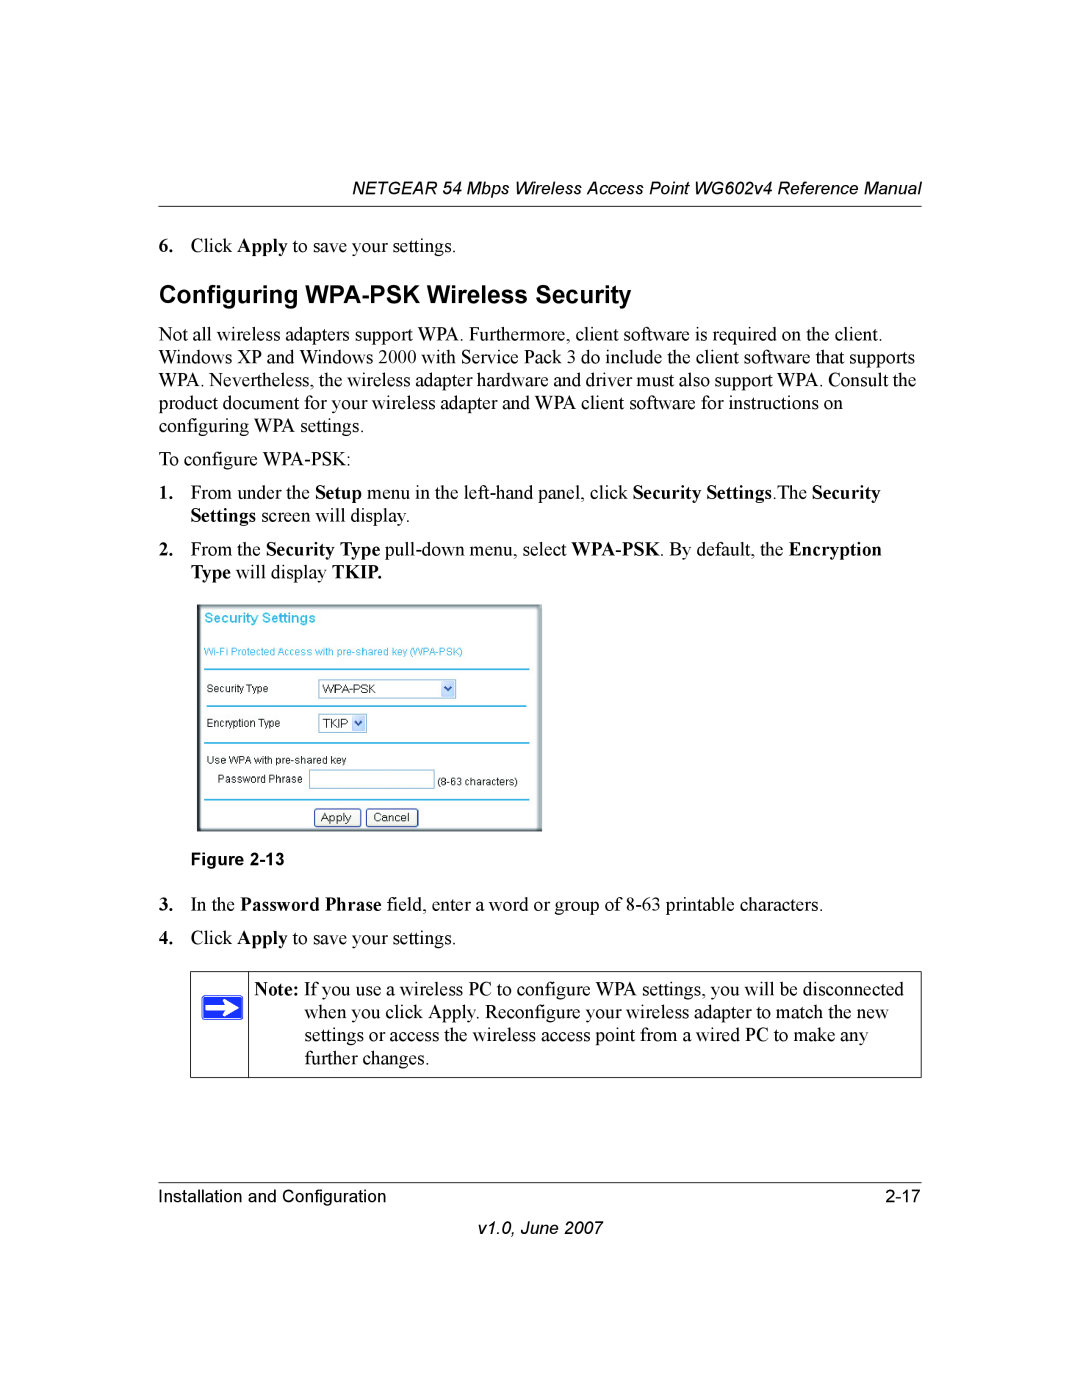 NETGEAR WG602V4 manual Configuring WPA-PSK Wireless Security 